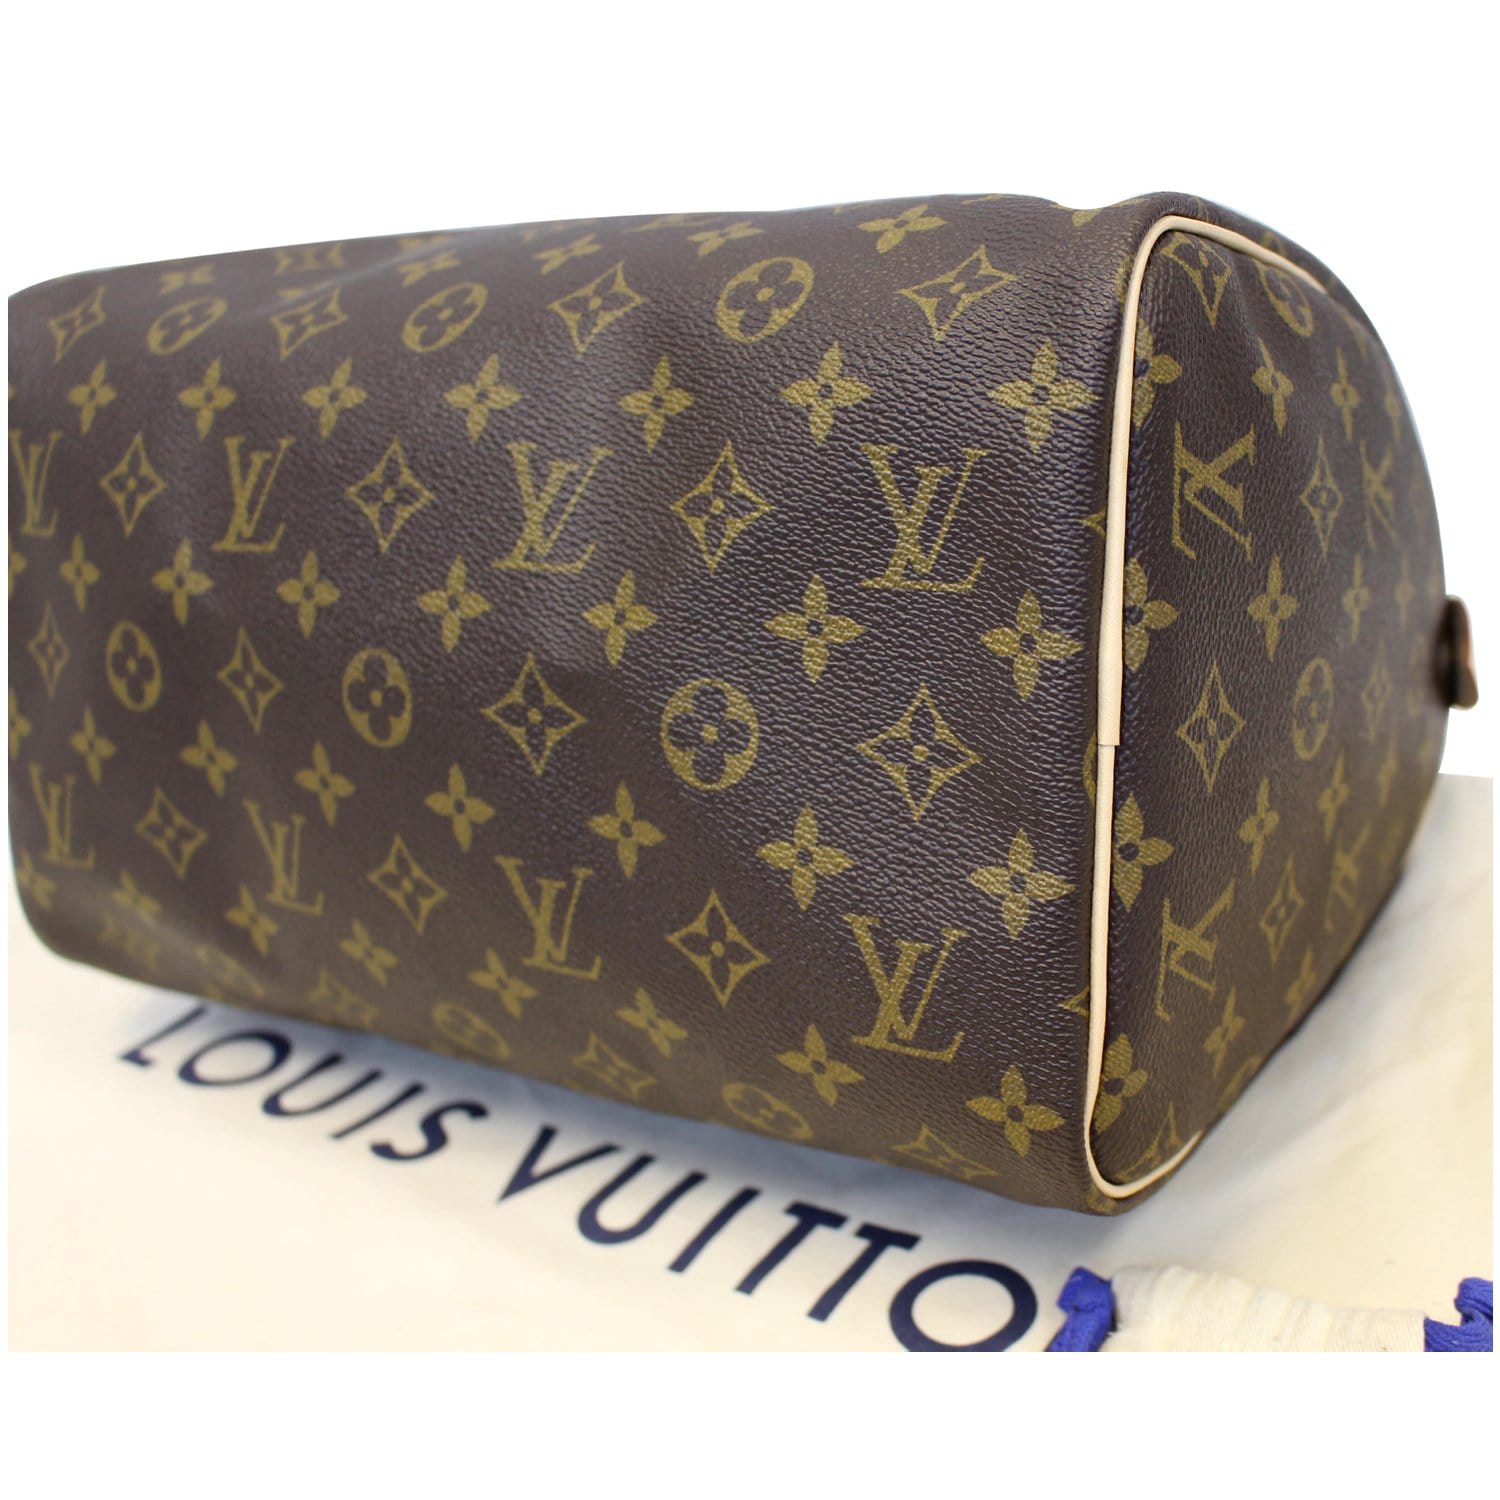 Louis Vuitton Speedy 30 Women's Authentic Pre Owned Custom Painted Handbag Dual Top Handles Brown, Yellow, White Luxury Monogram Canvas